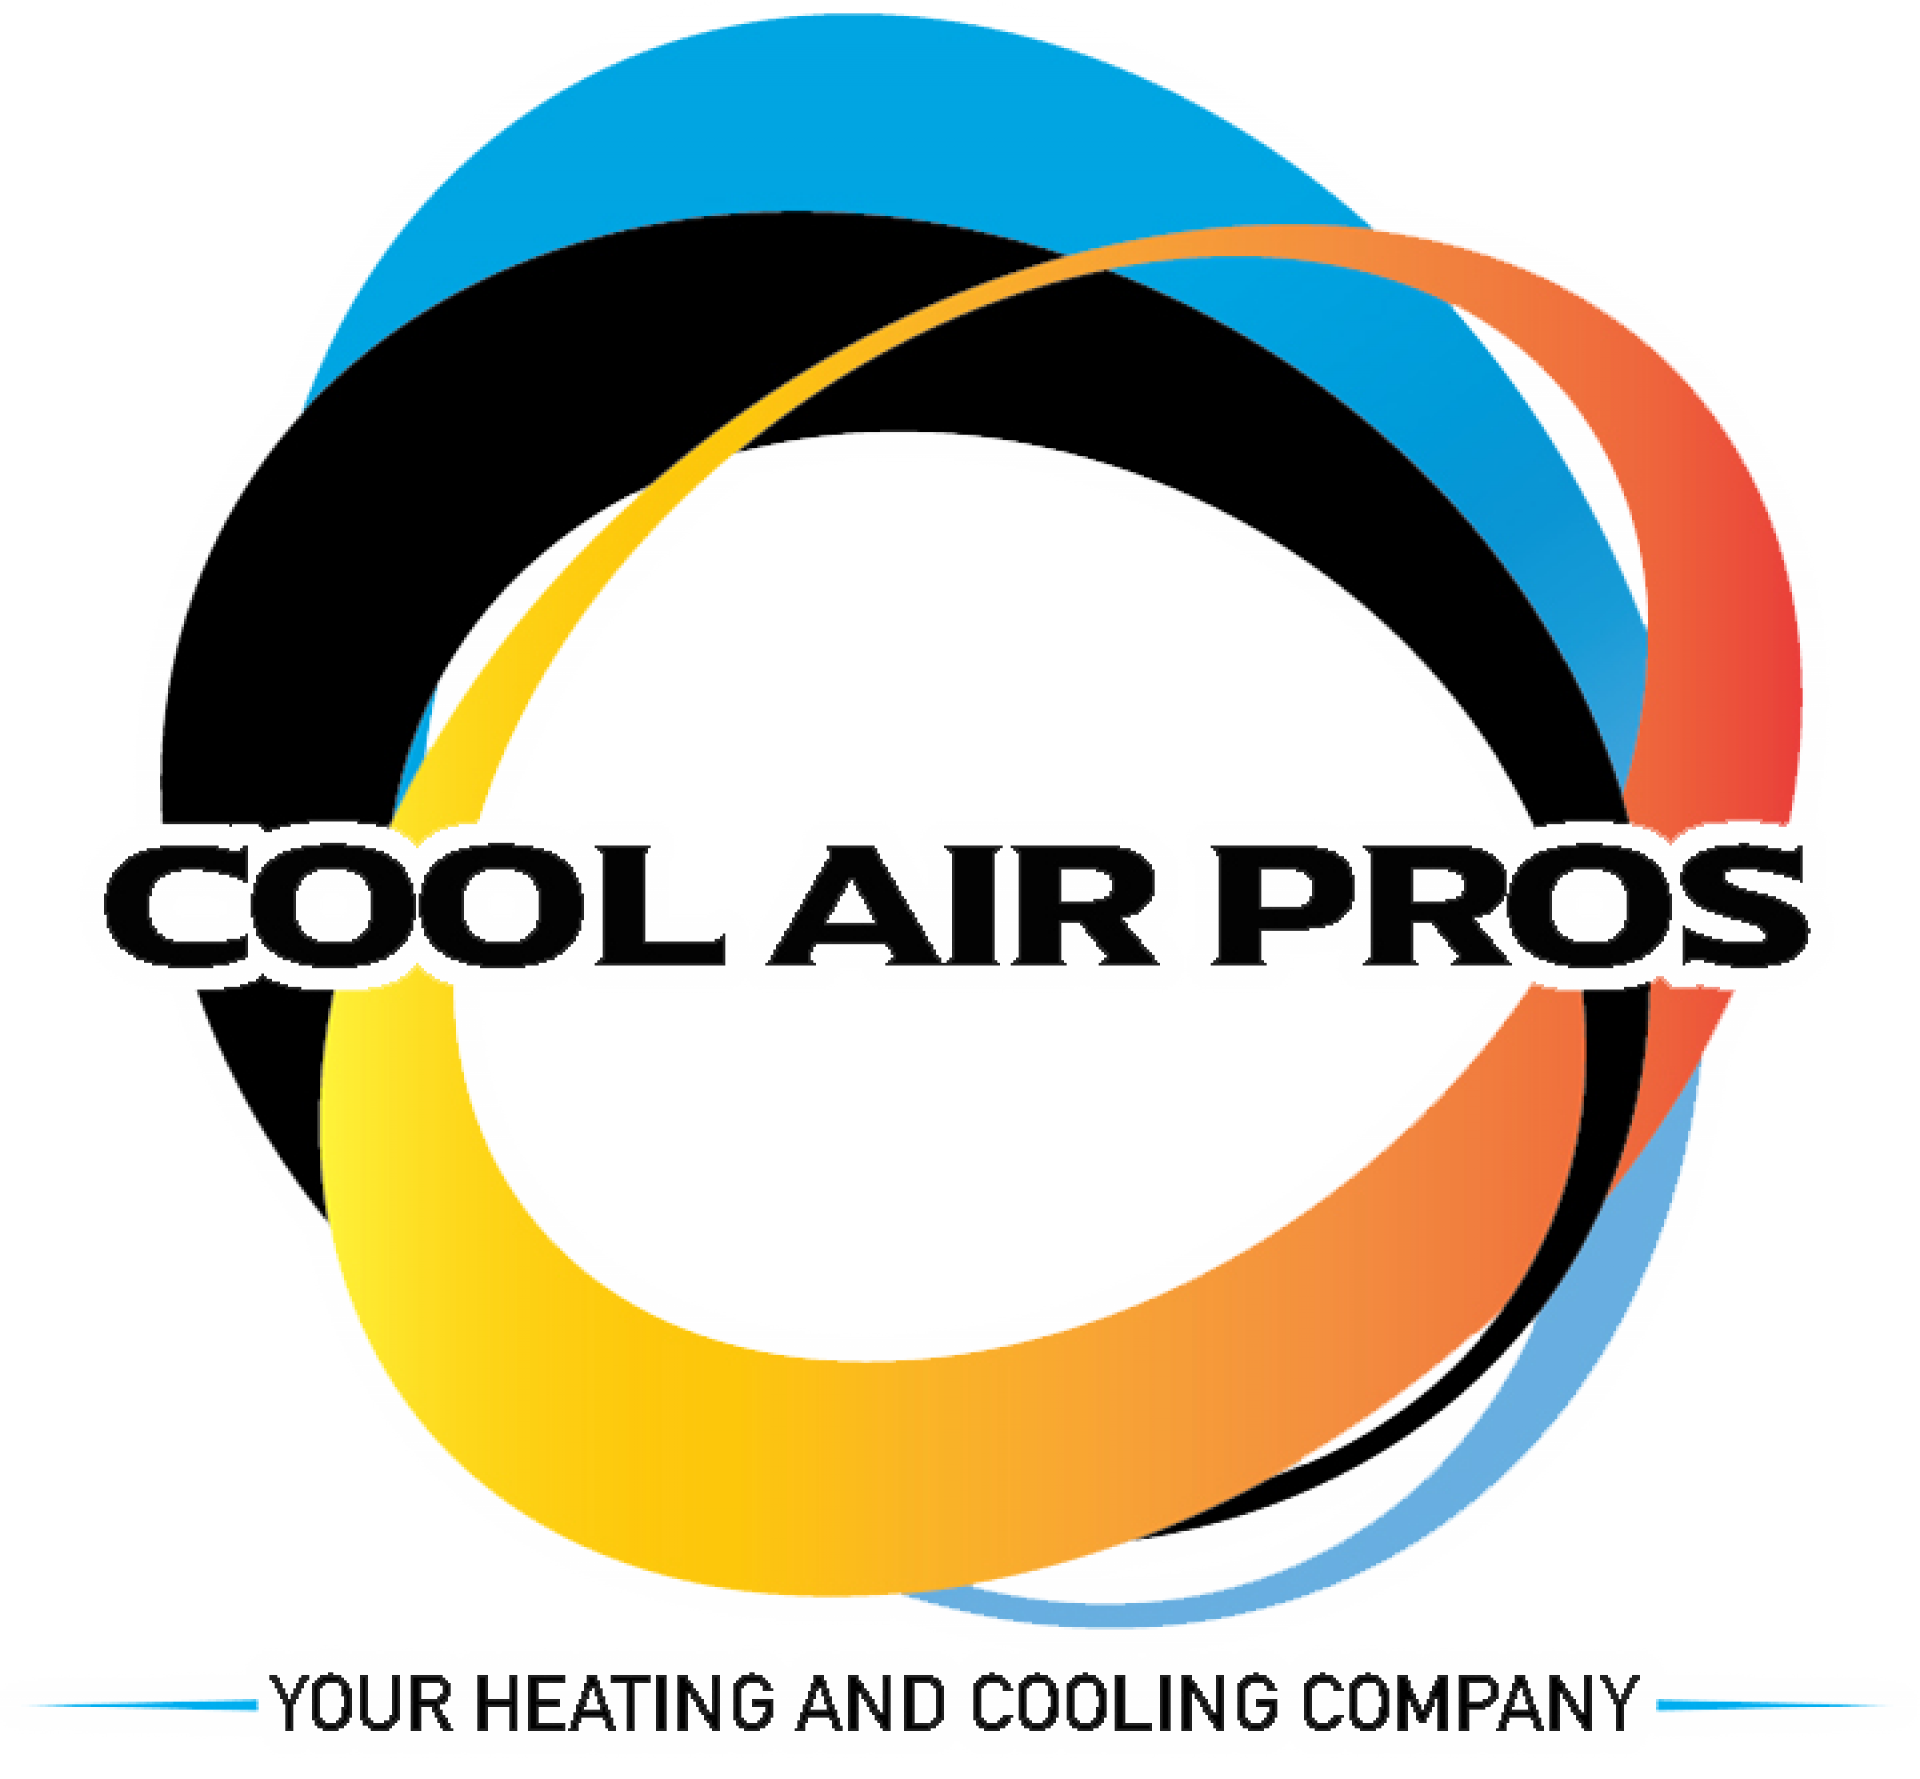 Cool Air Pros company logo